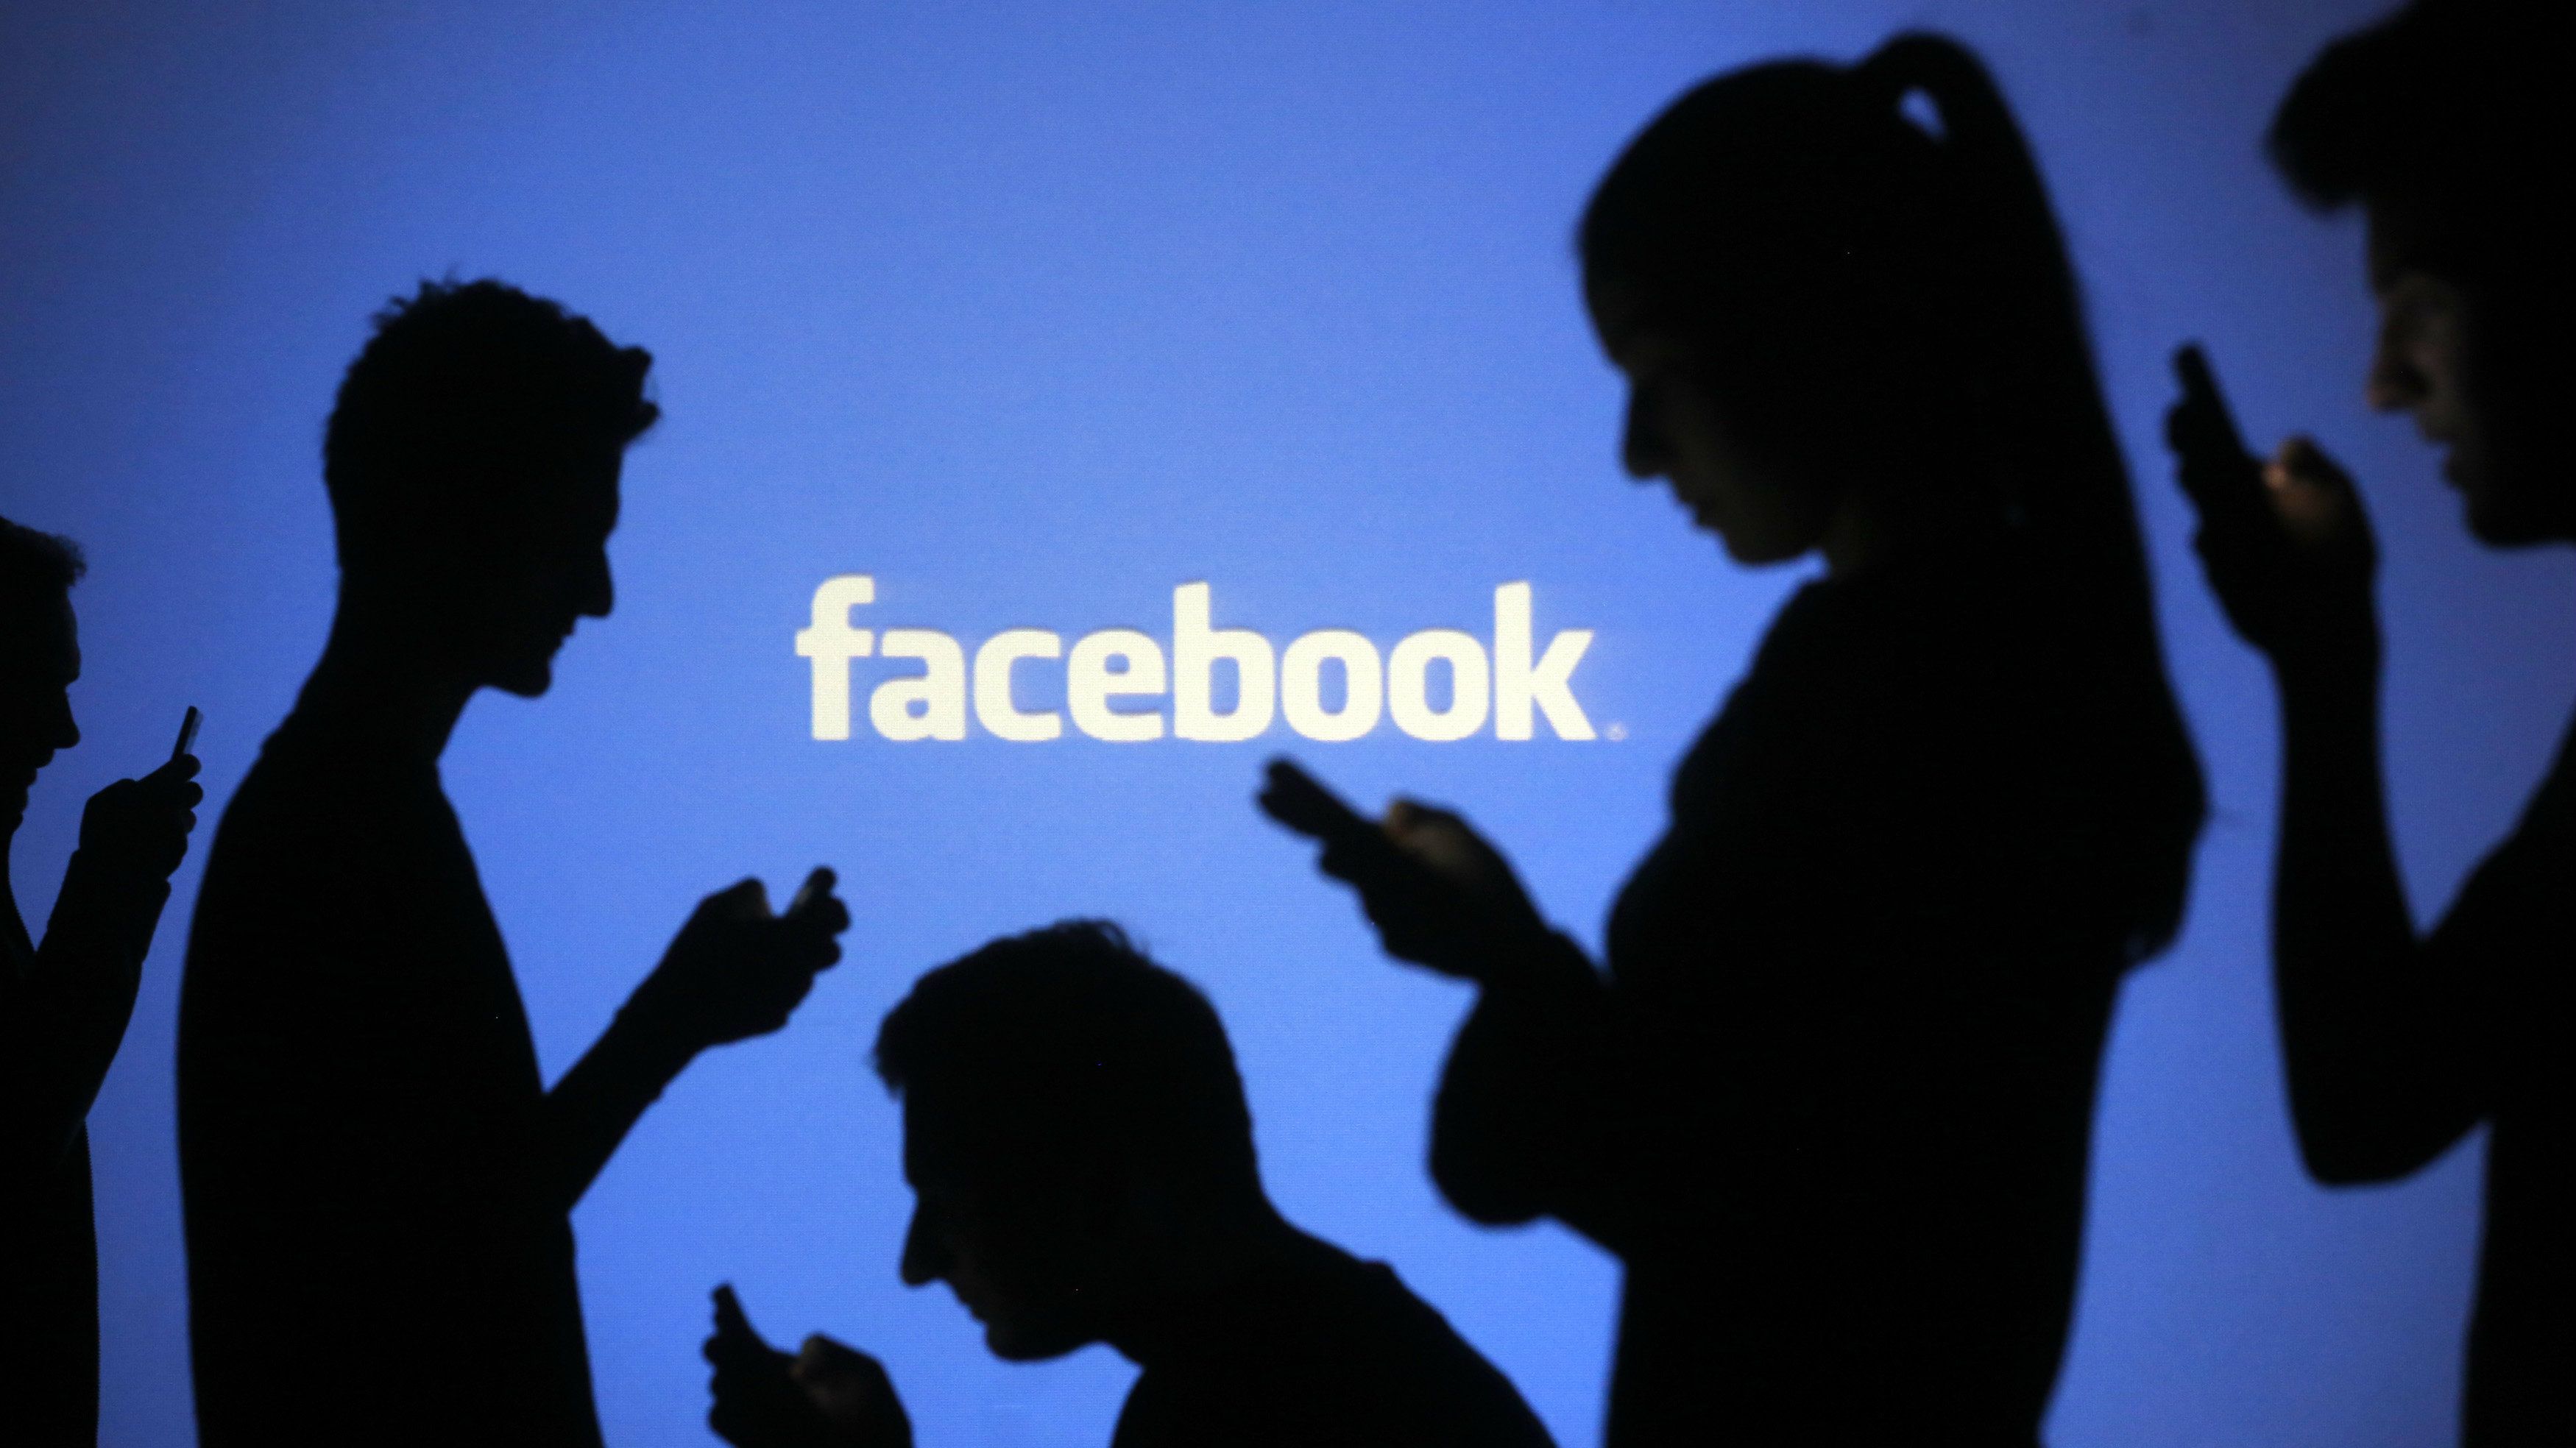 Facebook第三季度净利润47.07亿美元 同比增长79%